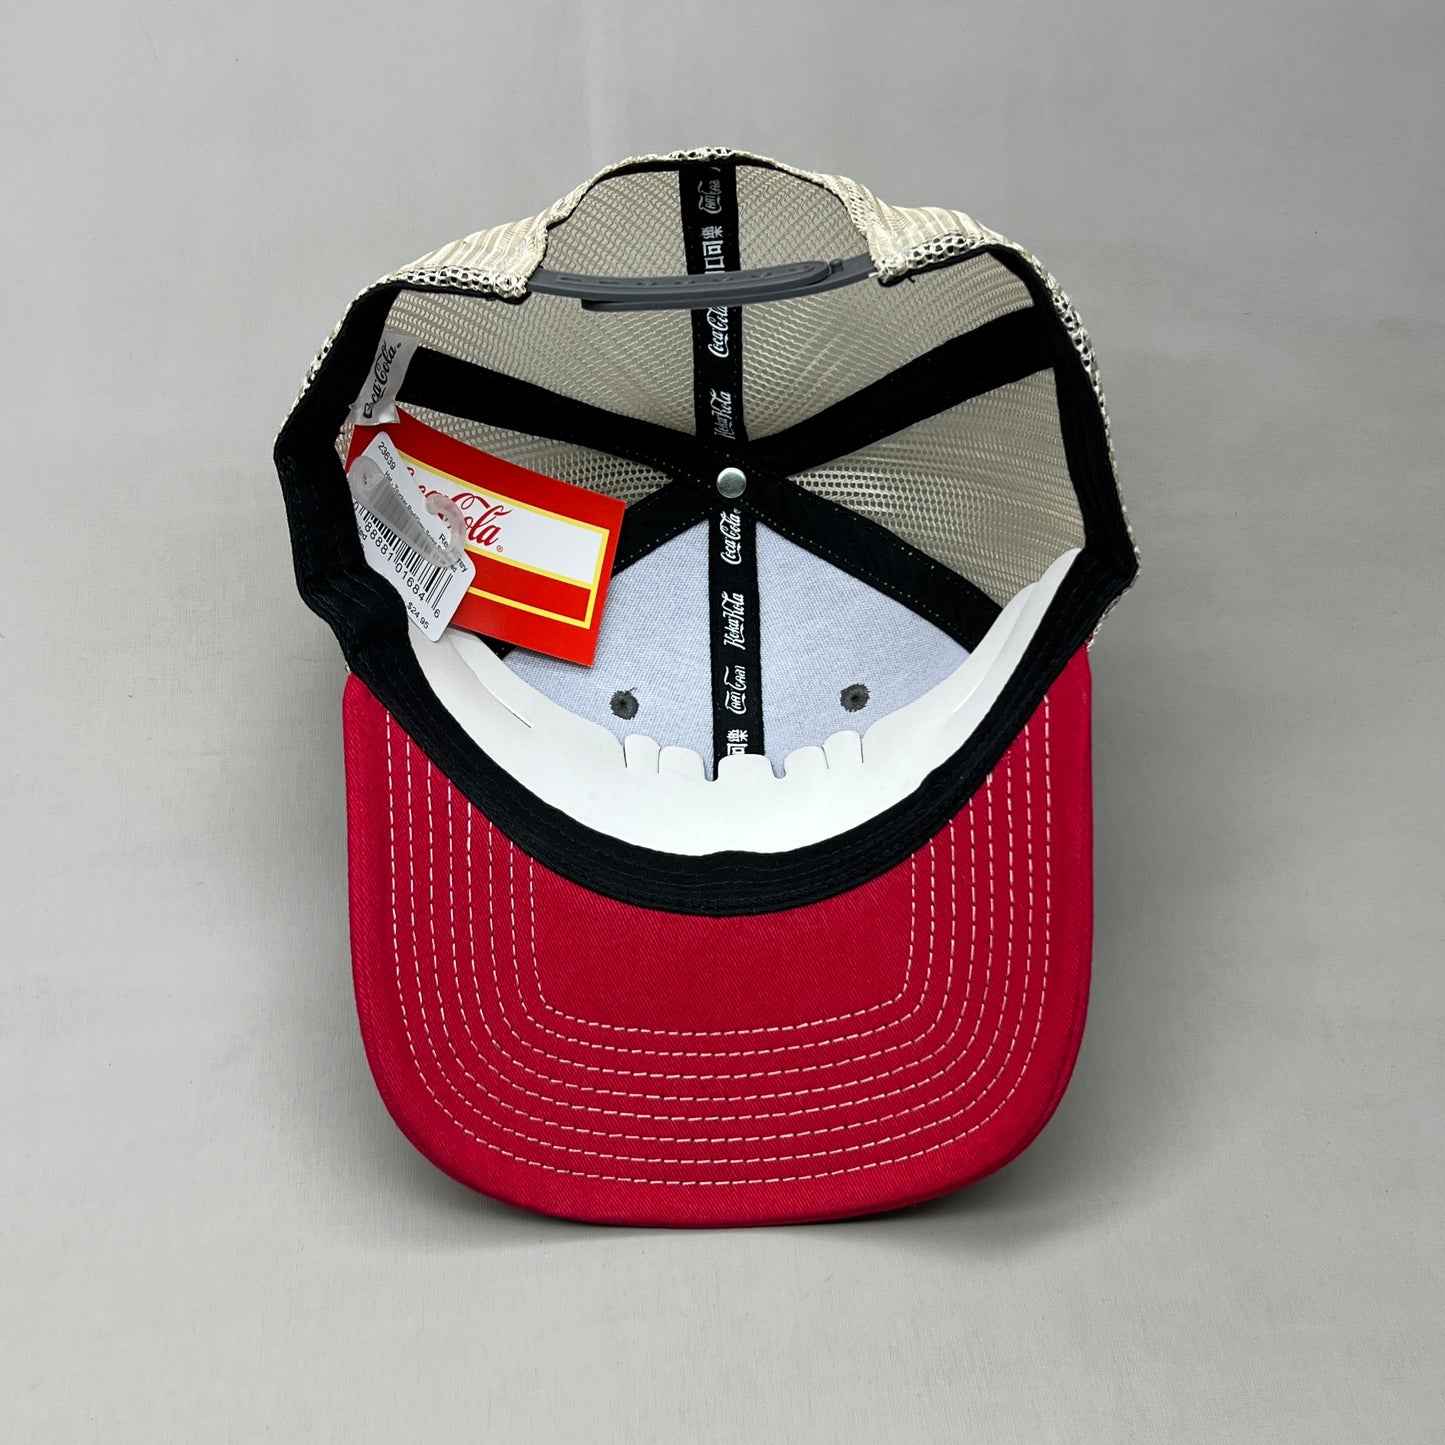 COCA-COLA Logo Trucker Baseball Cap Sz One Size Grey / Red 23639 (New)